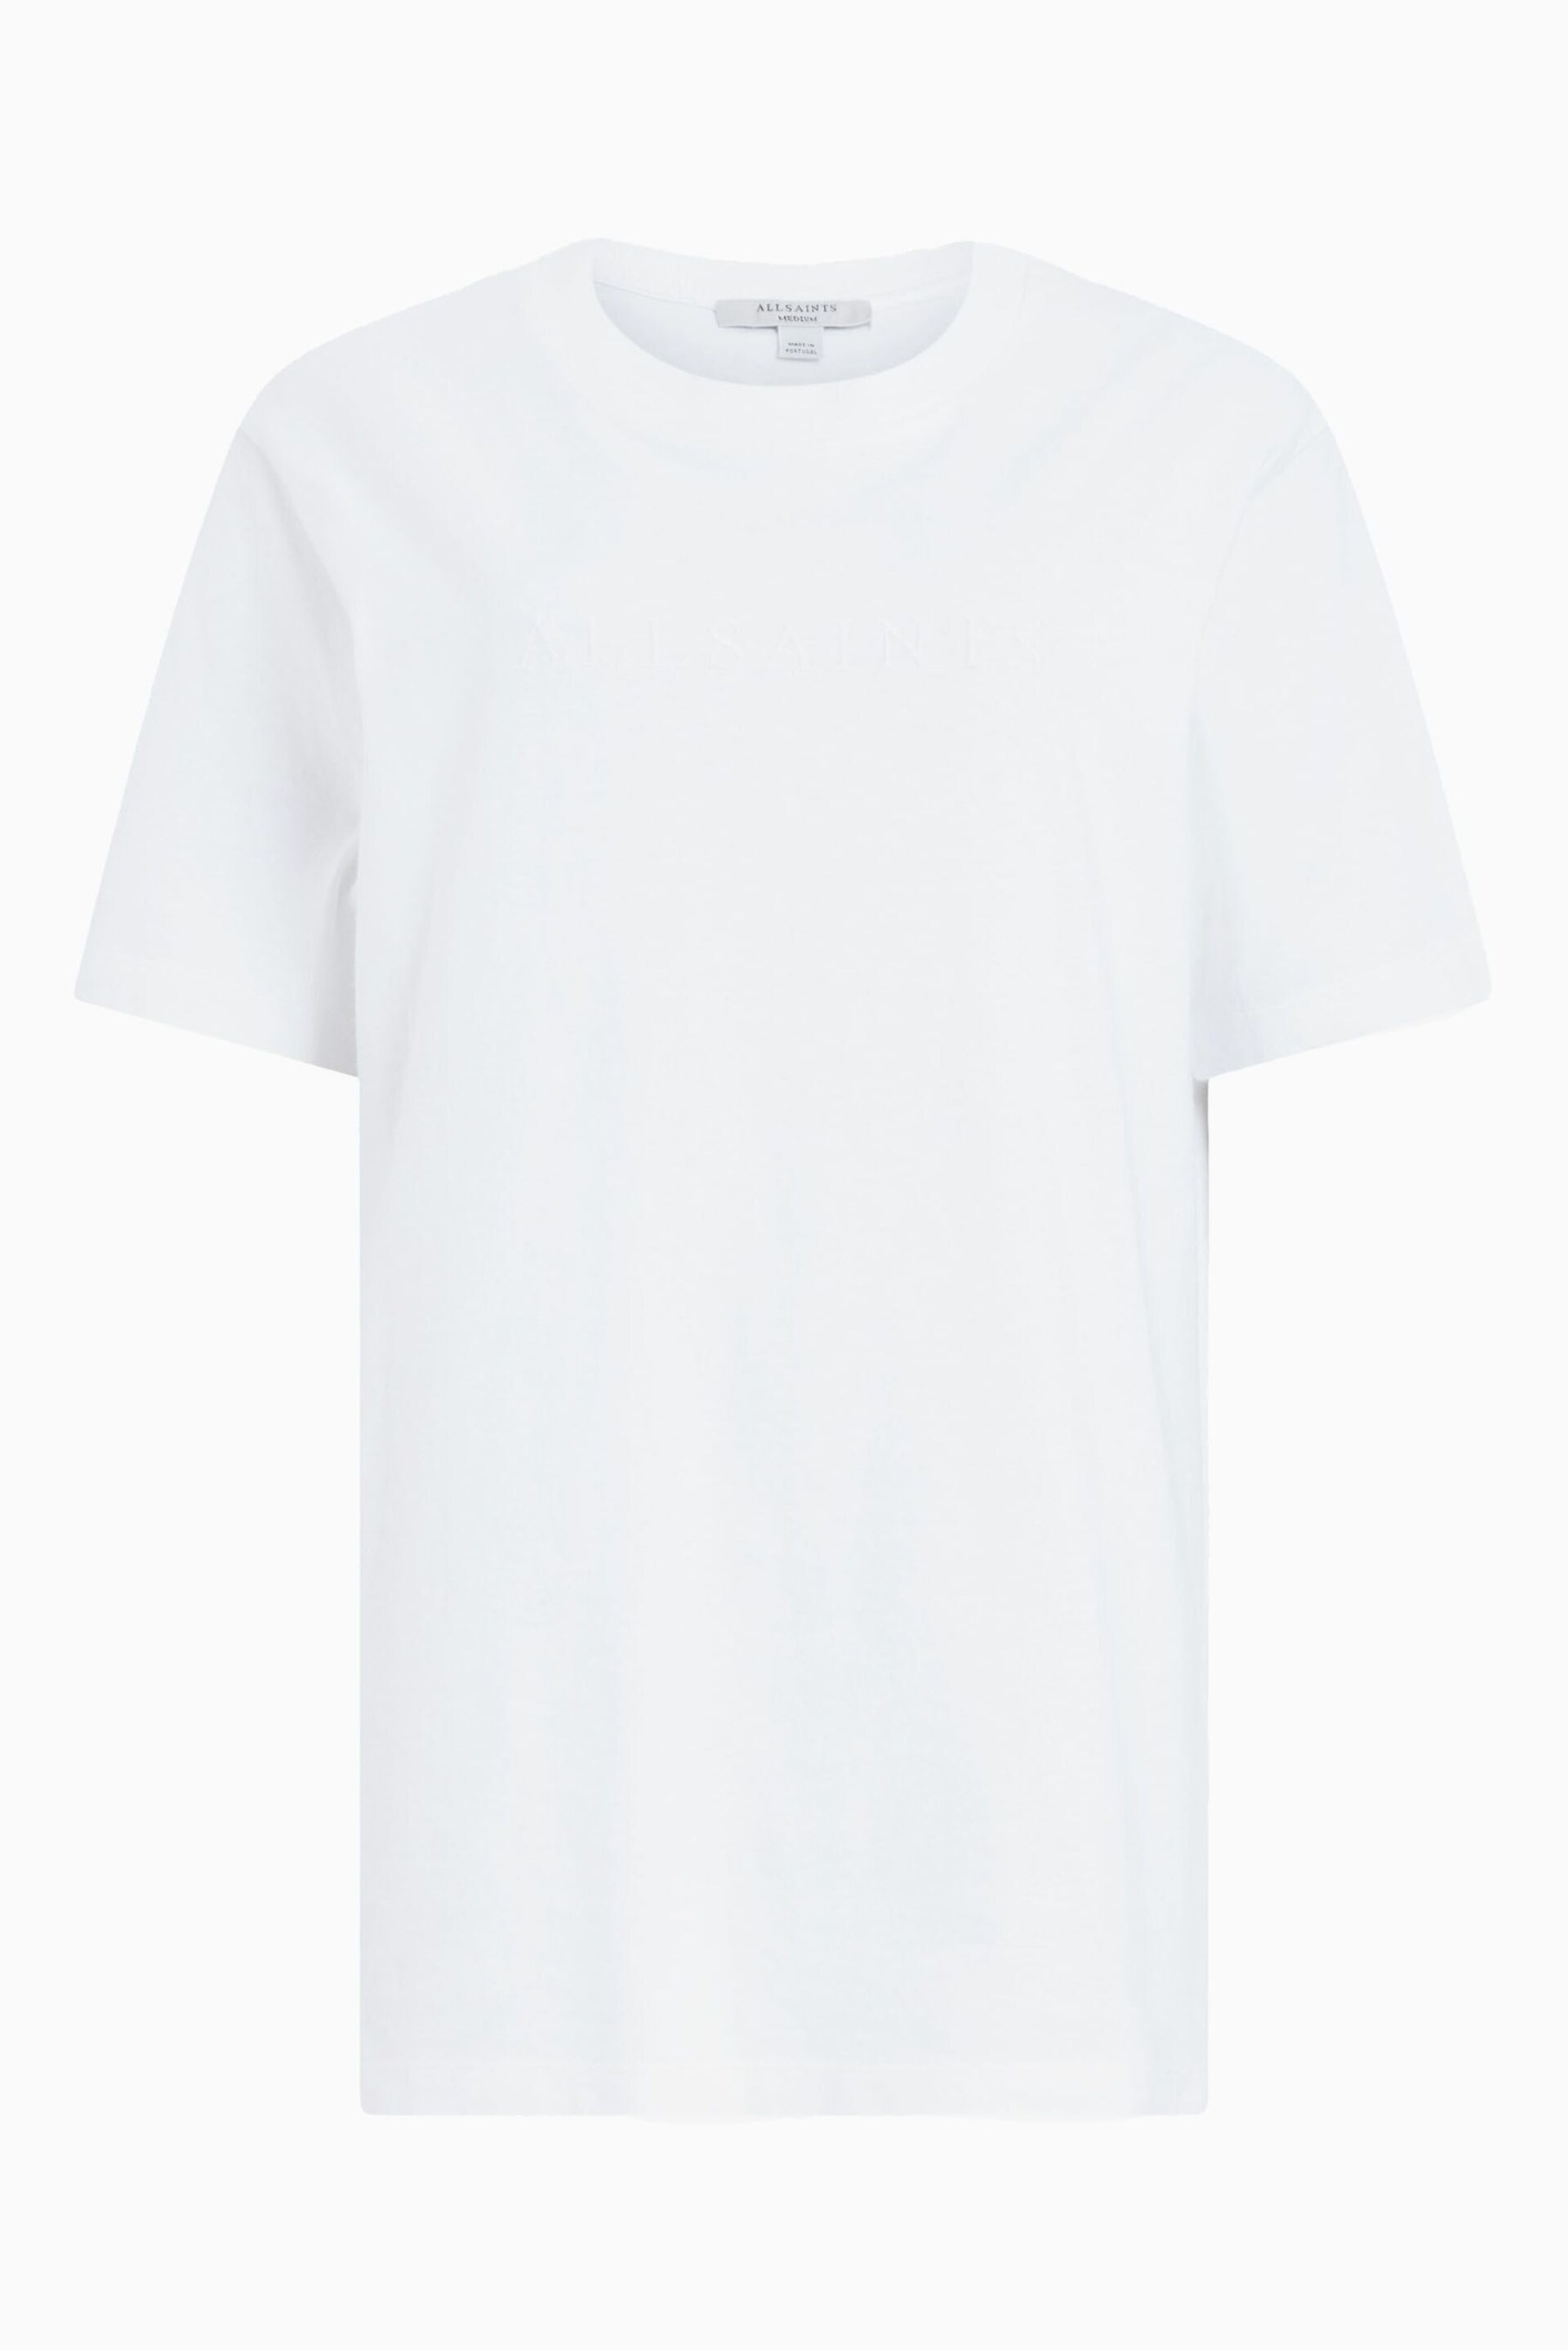 AllSaints White BF  Pippa T-Shirt - Image 6 of 6